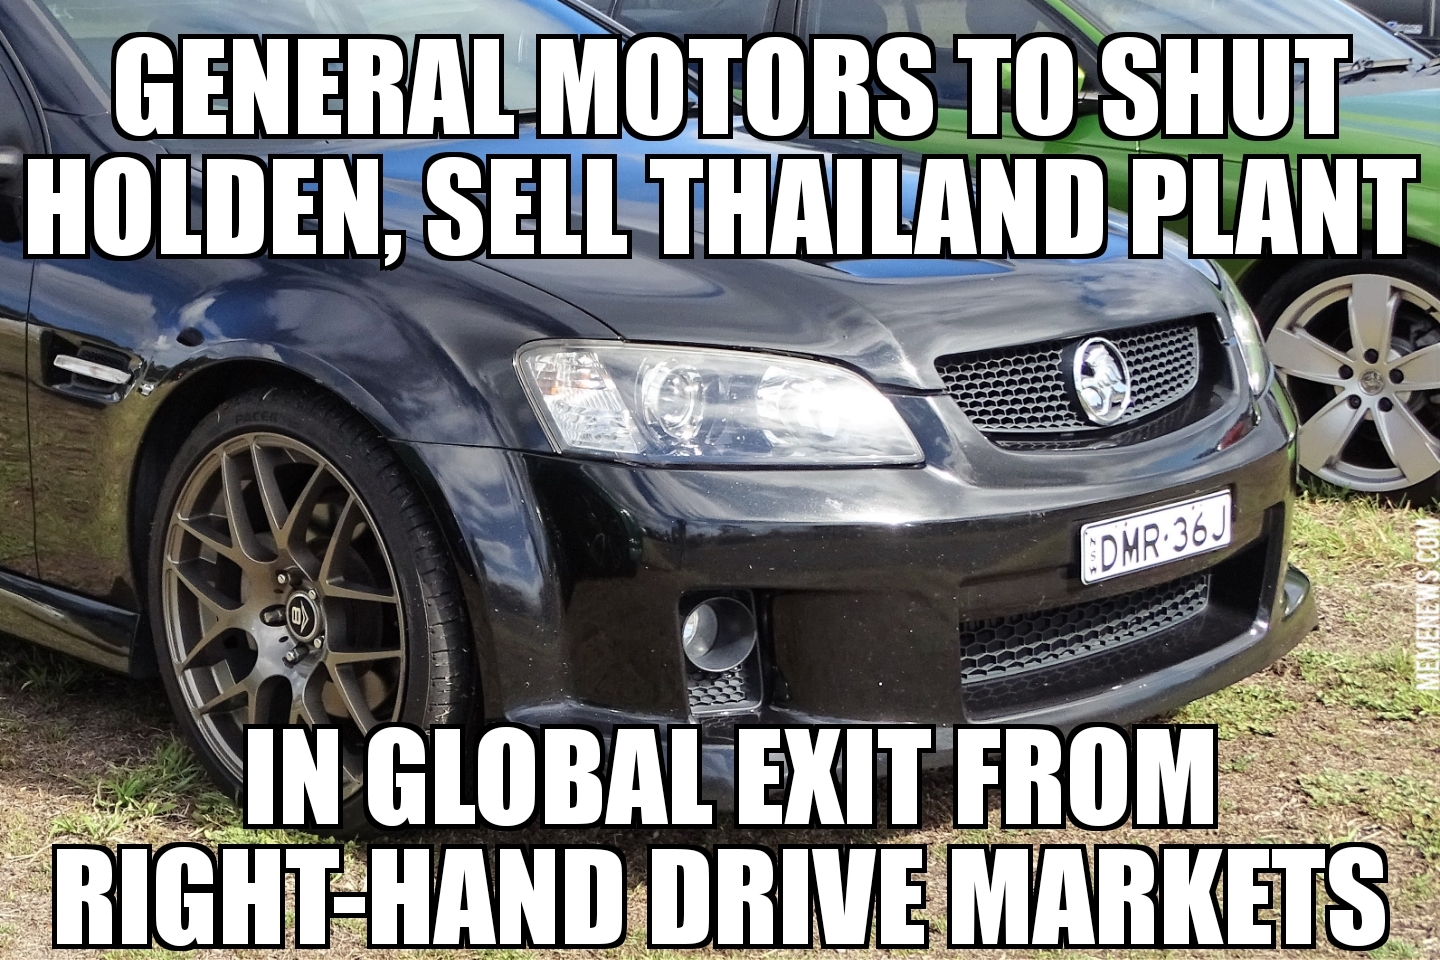 GM to shut Holden